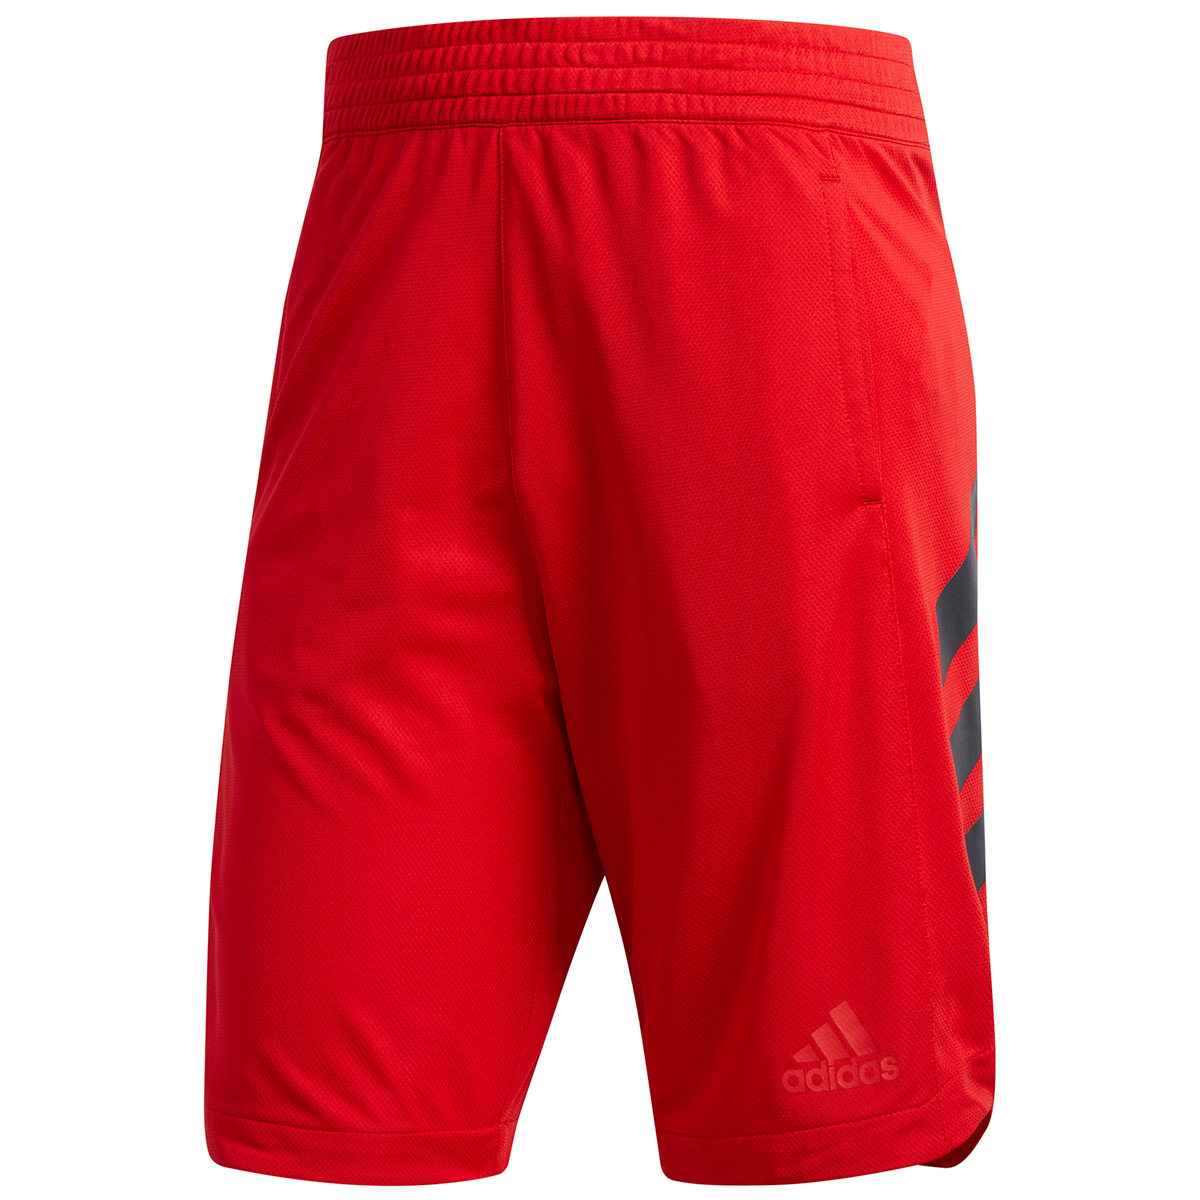 Adidas Men's Sport Shorts - Red, L